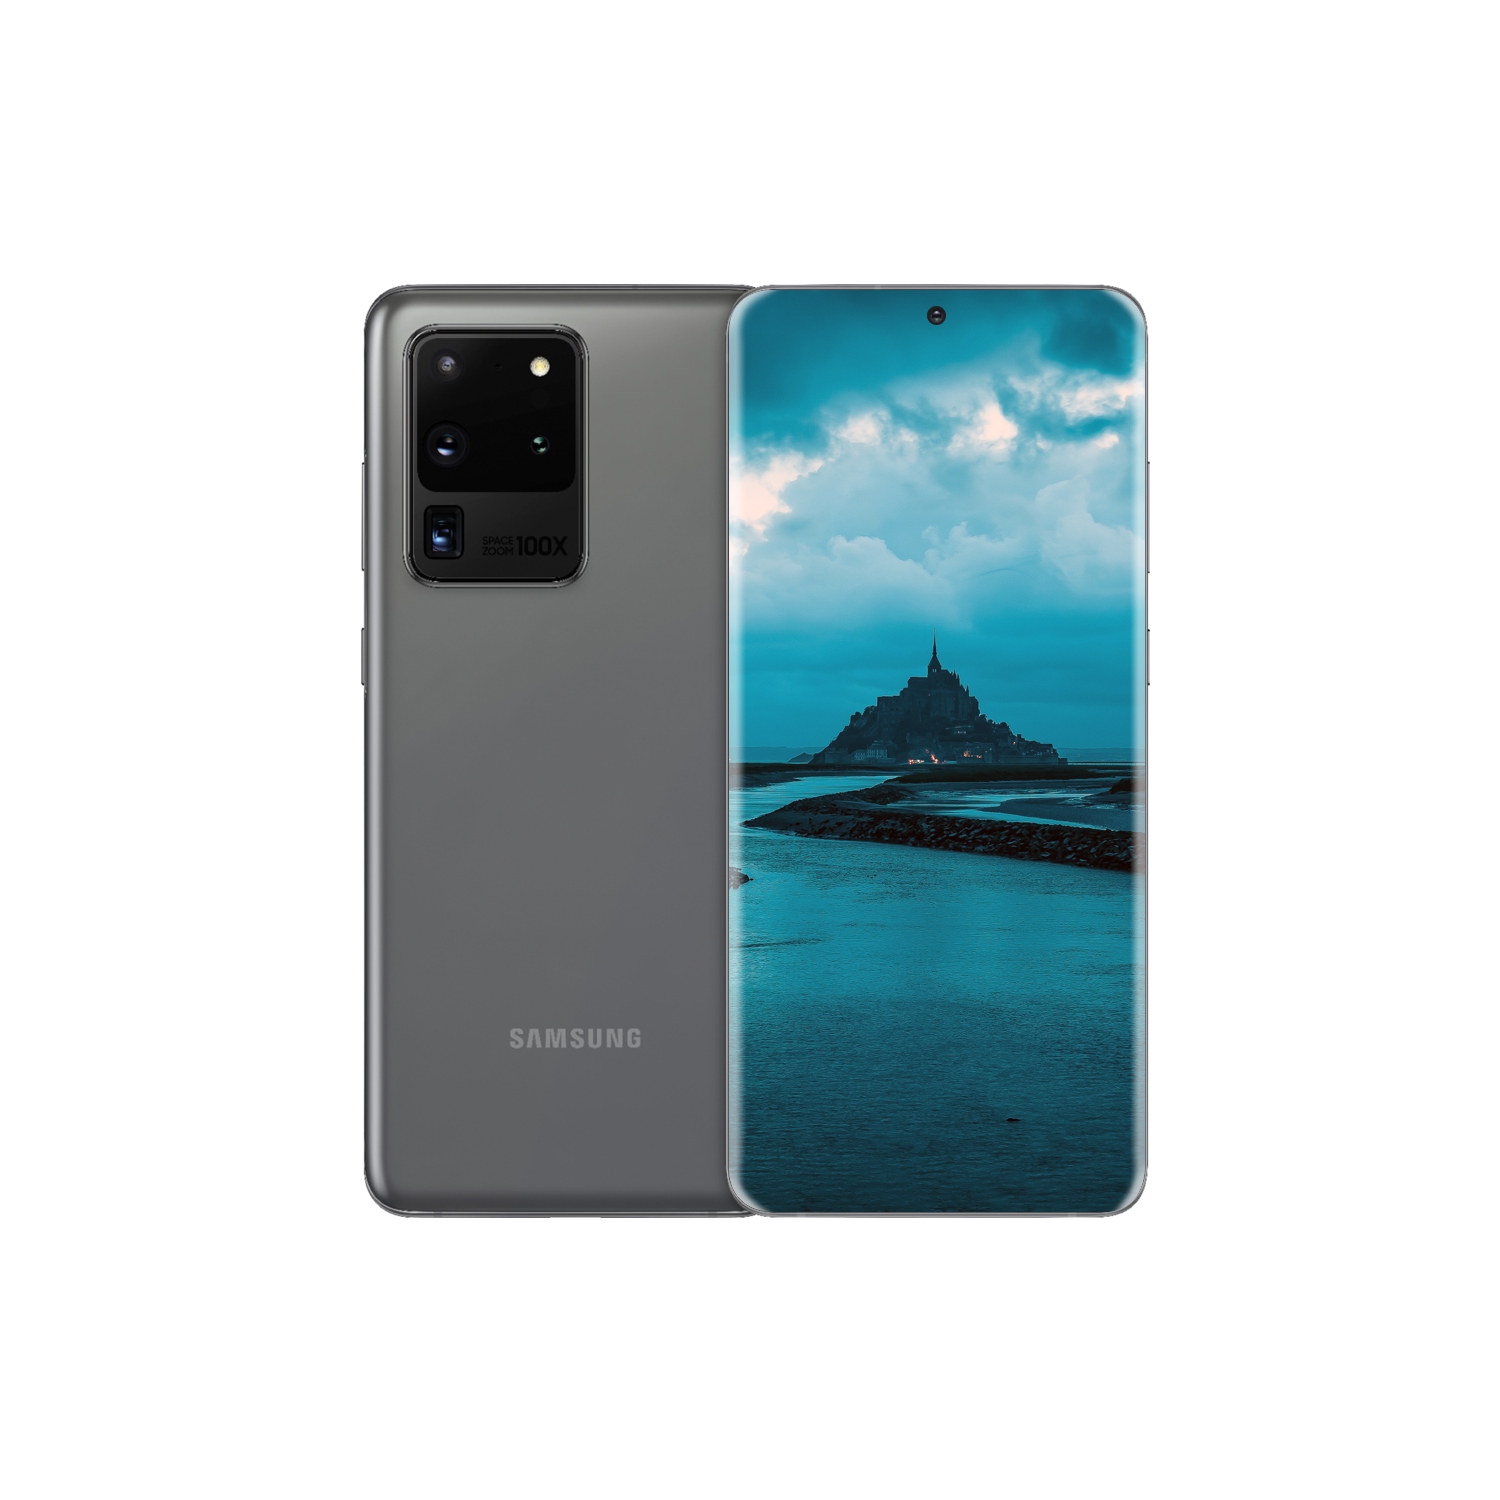 Samsung Galaxy S20 Ultra 5G 128GB unlocked - Gray